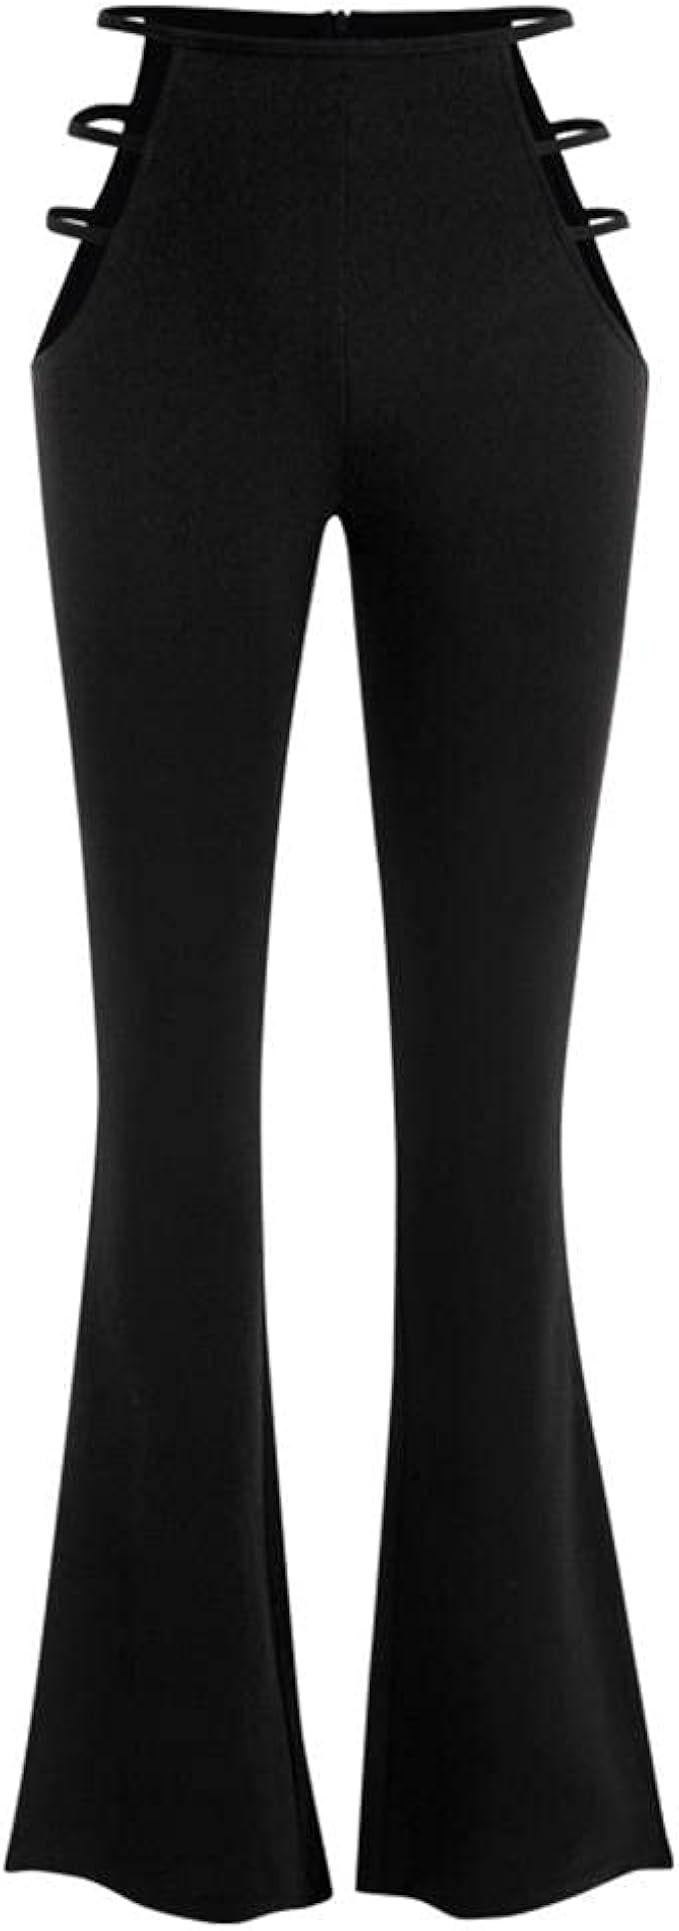 ZAFUL Women's High Waist Cut Out Pants Ladder Bootcut Textured Flare Pants Wide Leg Night Out Pants | Amazon (US)